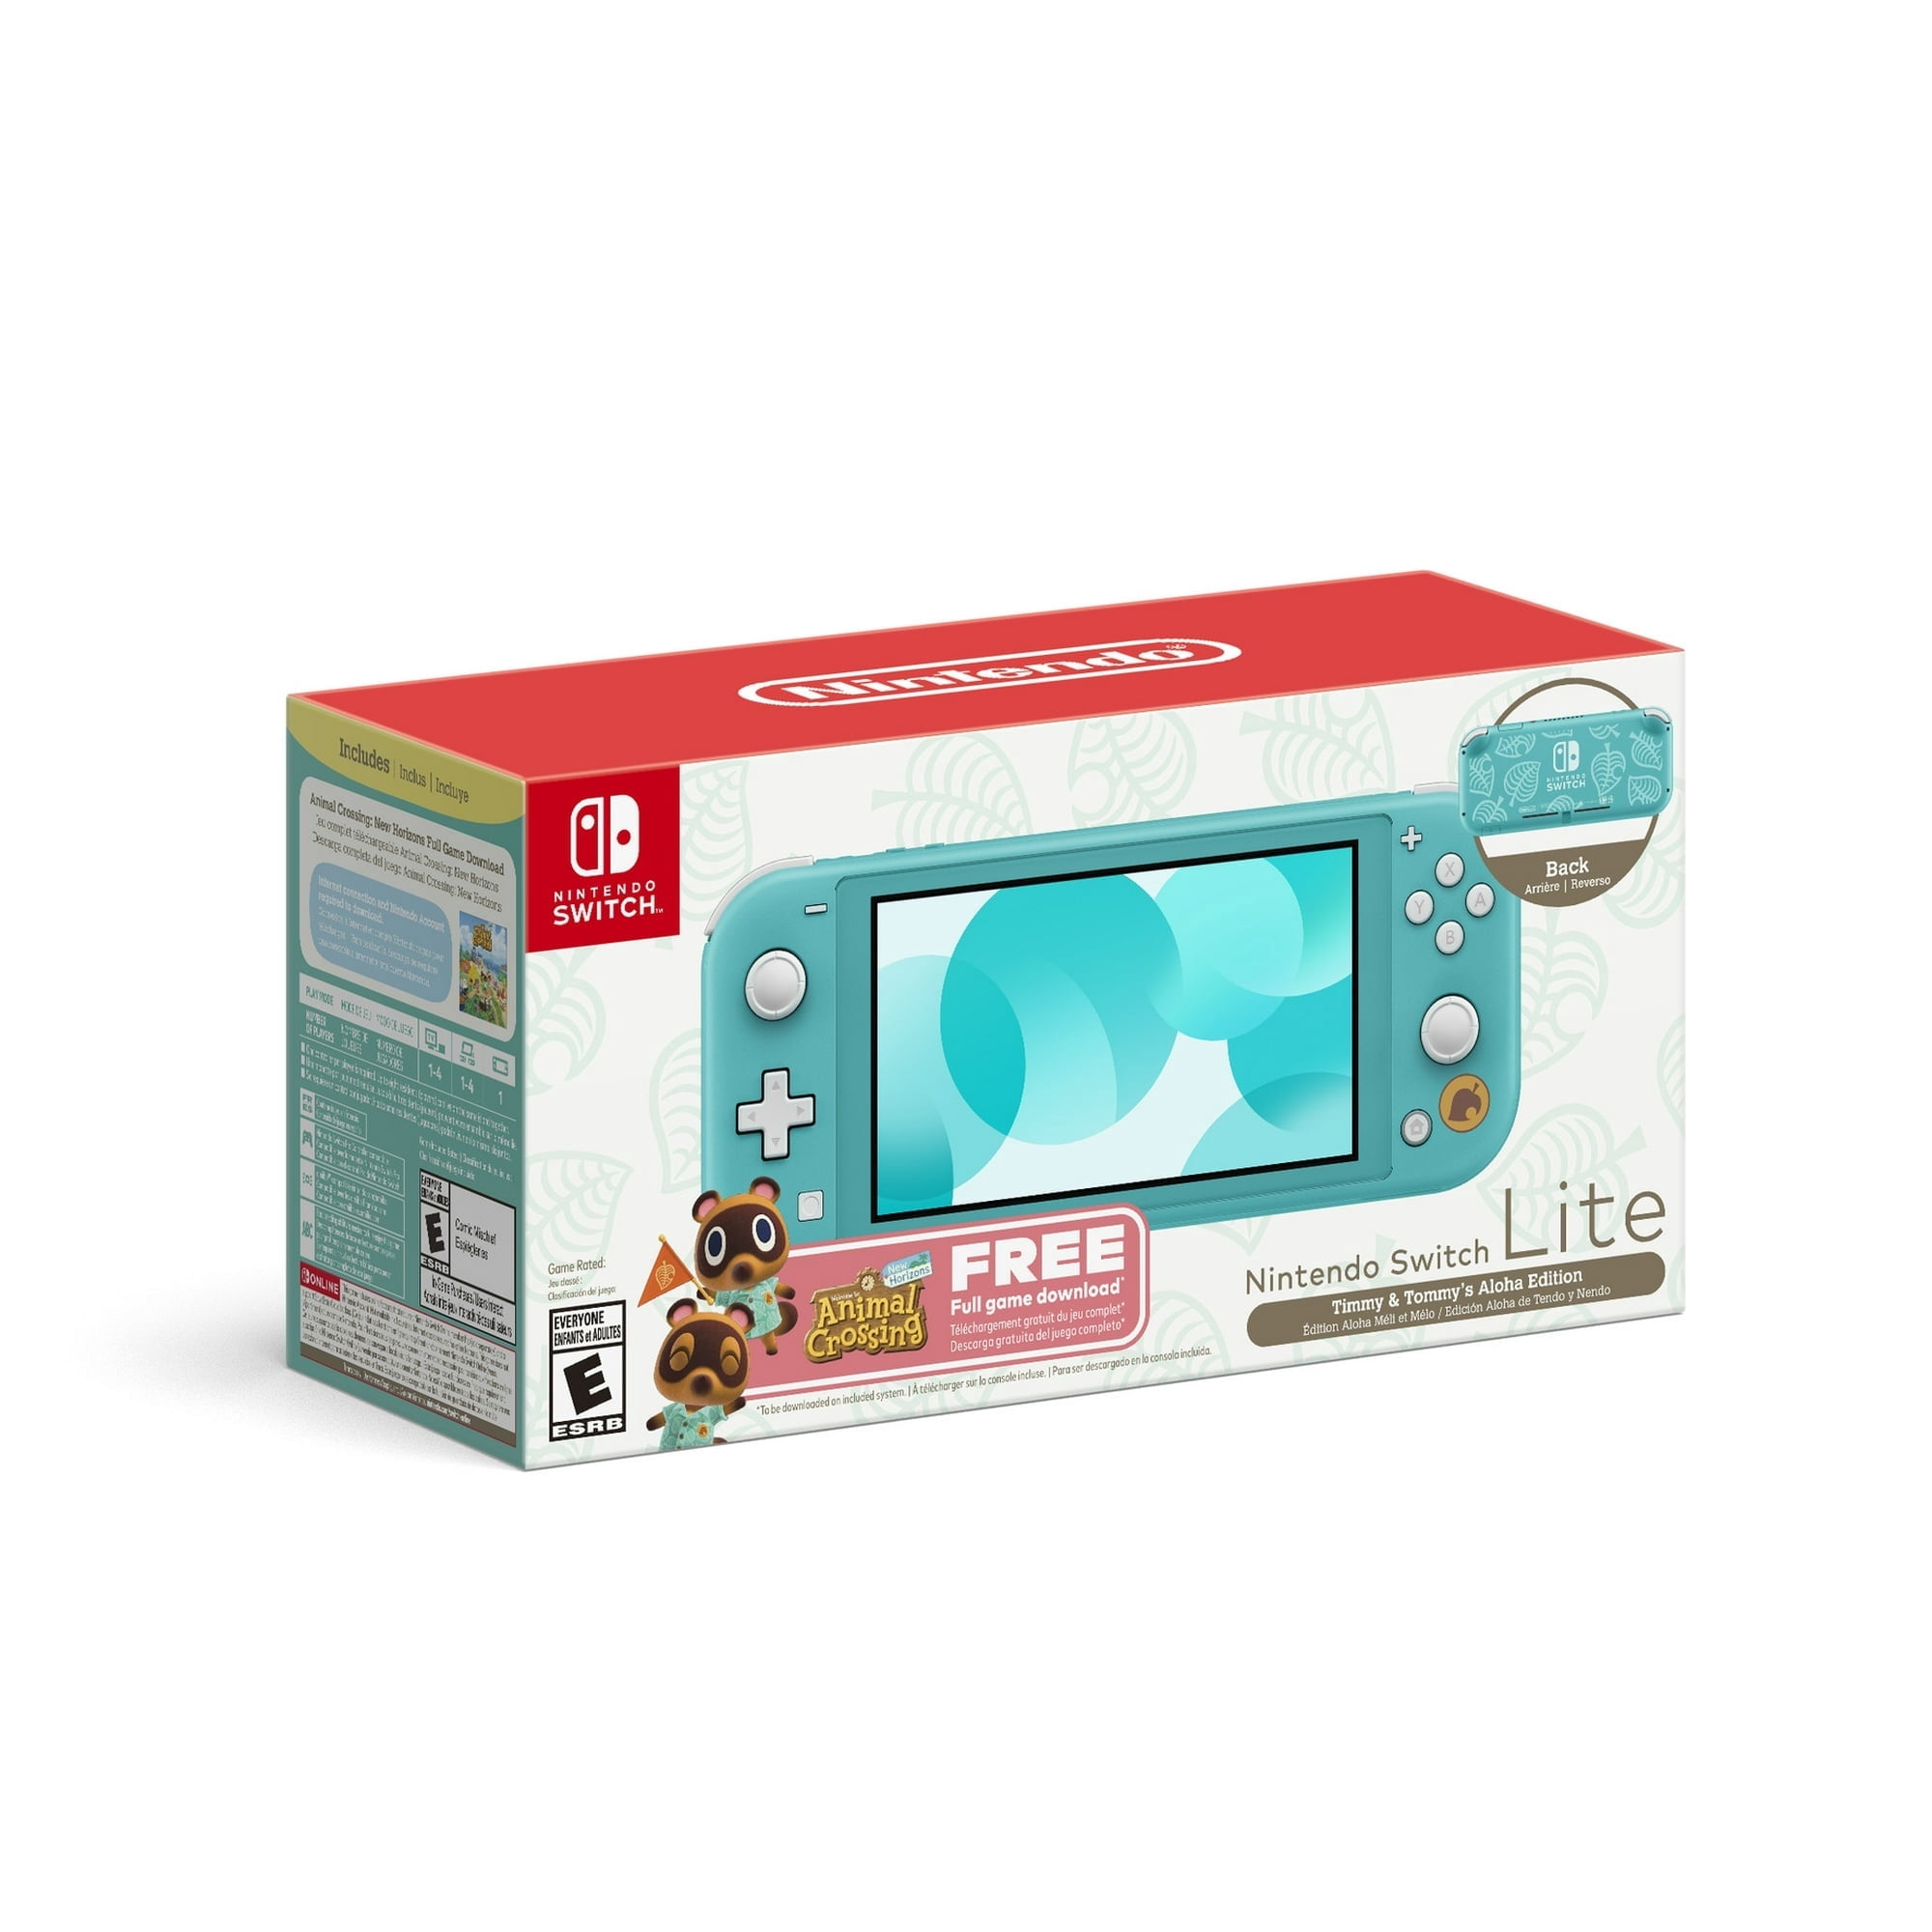 Nintendo Switch Lite Console, Gray - International Spec 